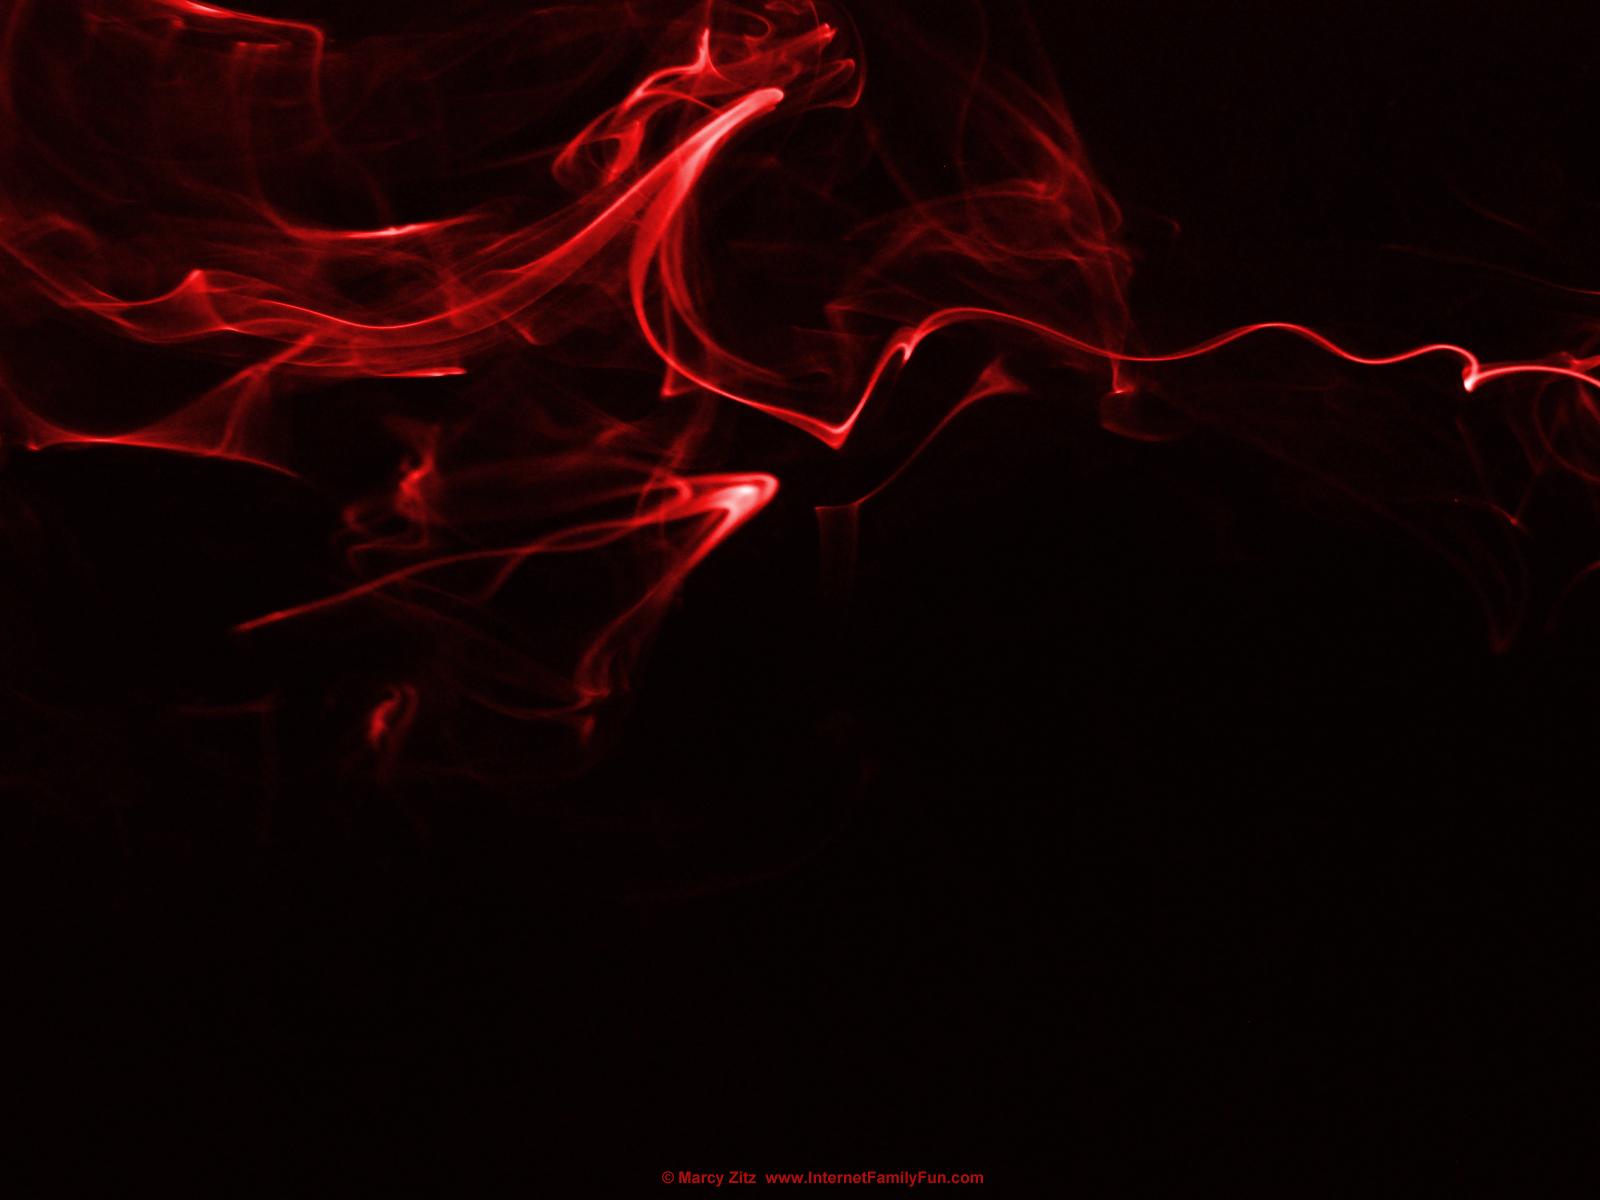 Abstract Red Smoke Desktop Background Wallpaper Image